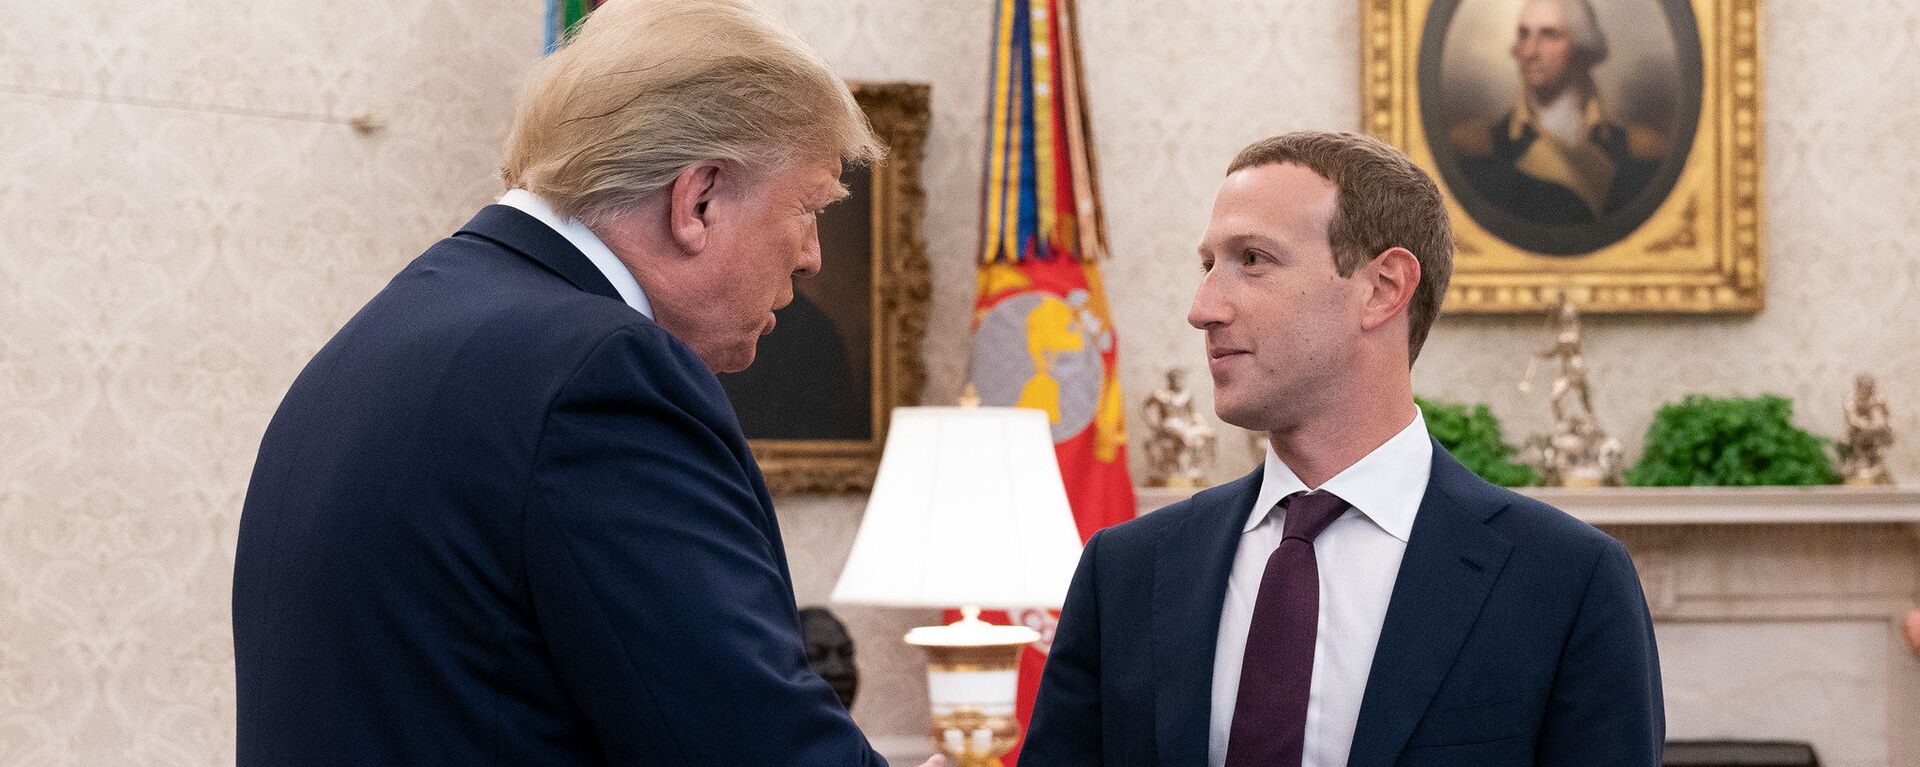 President Trump Meets with Mark Zuckerberg - Sputnik International, 1920, 10.09.2021